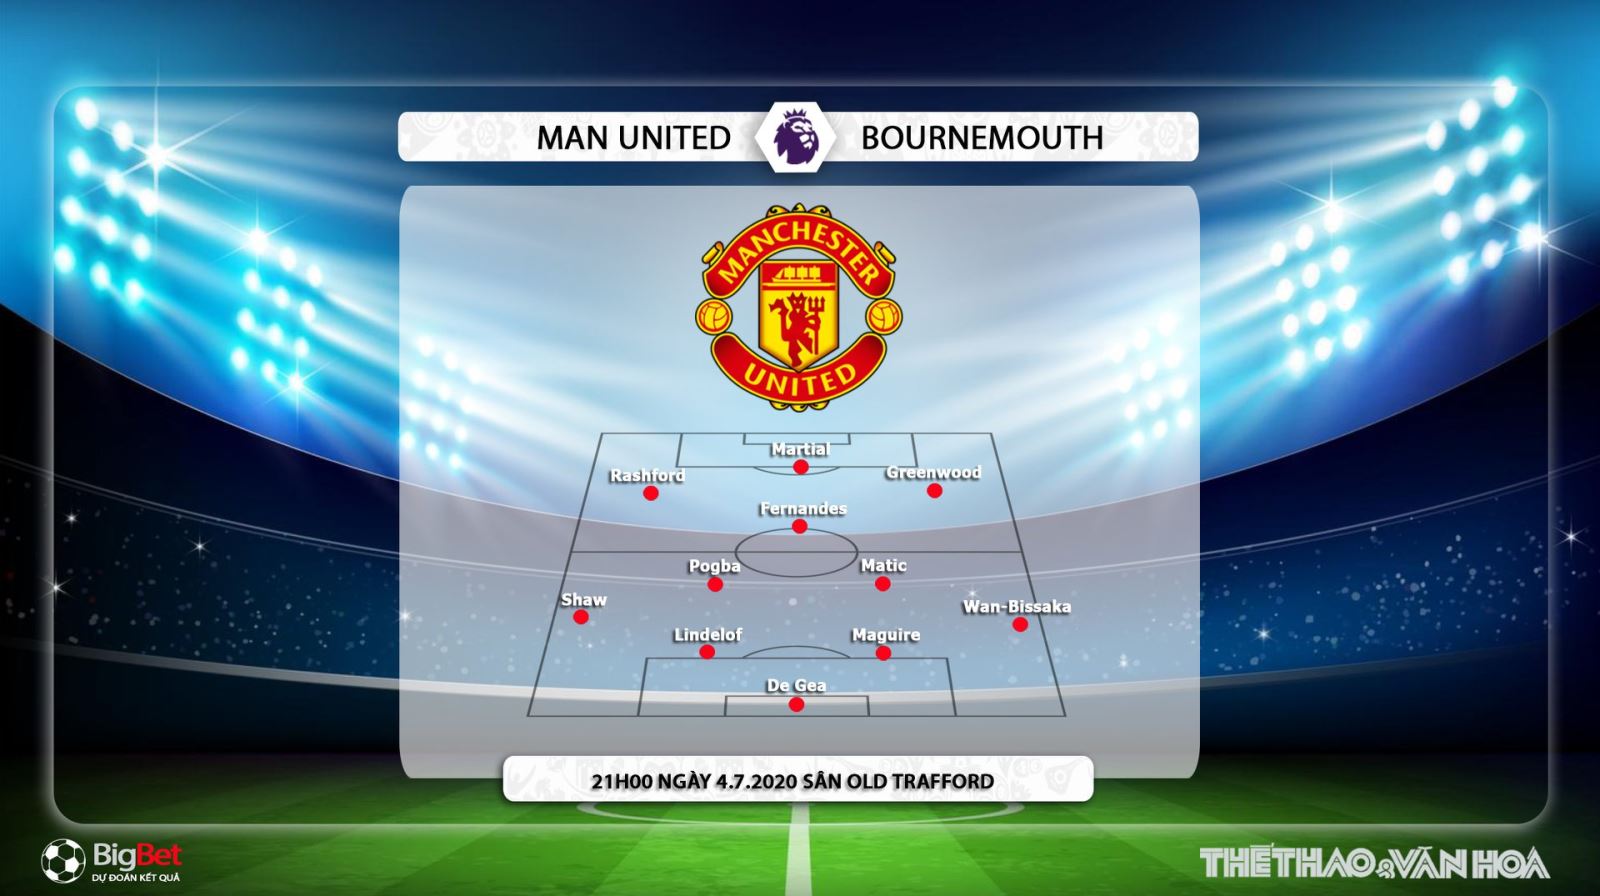 MU vs Bournemouth, manchester united, Bournemouth, trực tiếp bóng đá MU vs Bournemouth, nhận định bóng đá, kèo bóng đá, bóng đá hôm nay